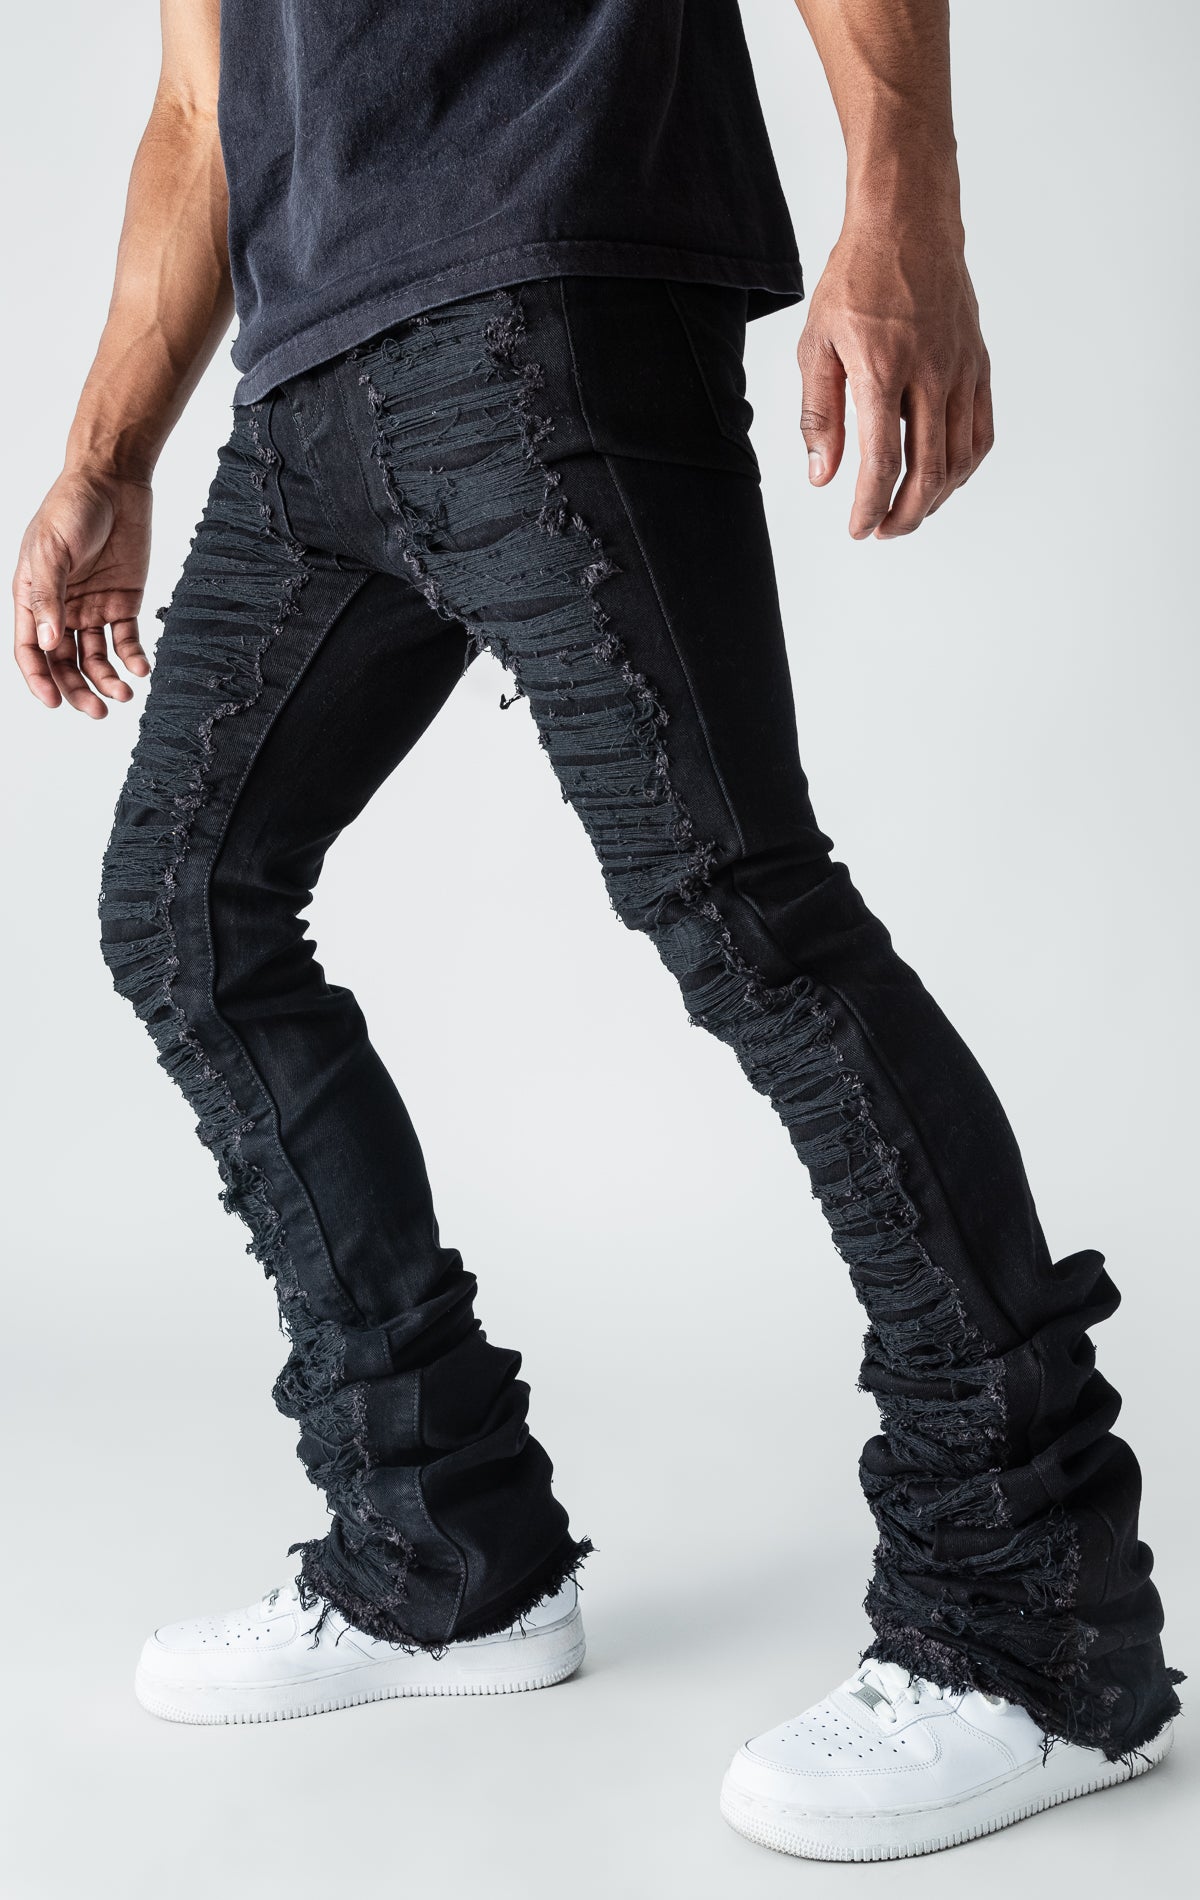 Black patterned stitched, flared denim stacked jeans.